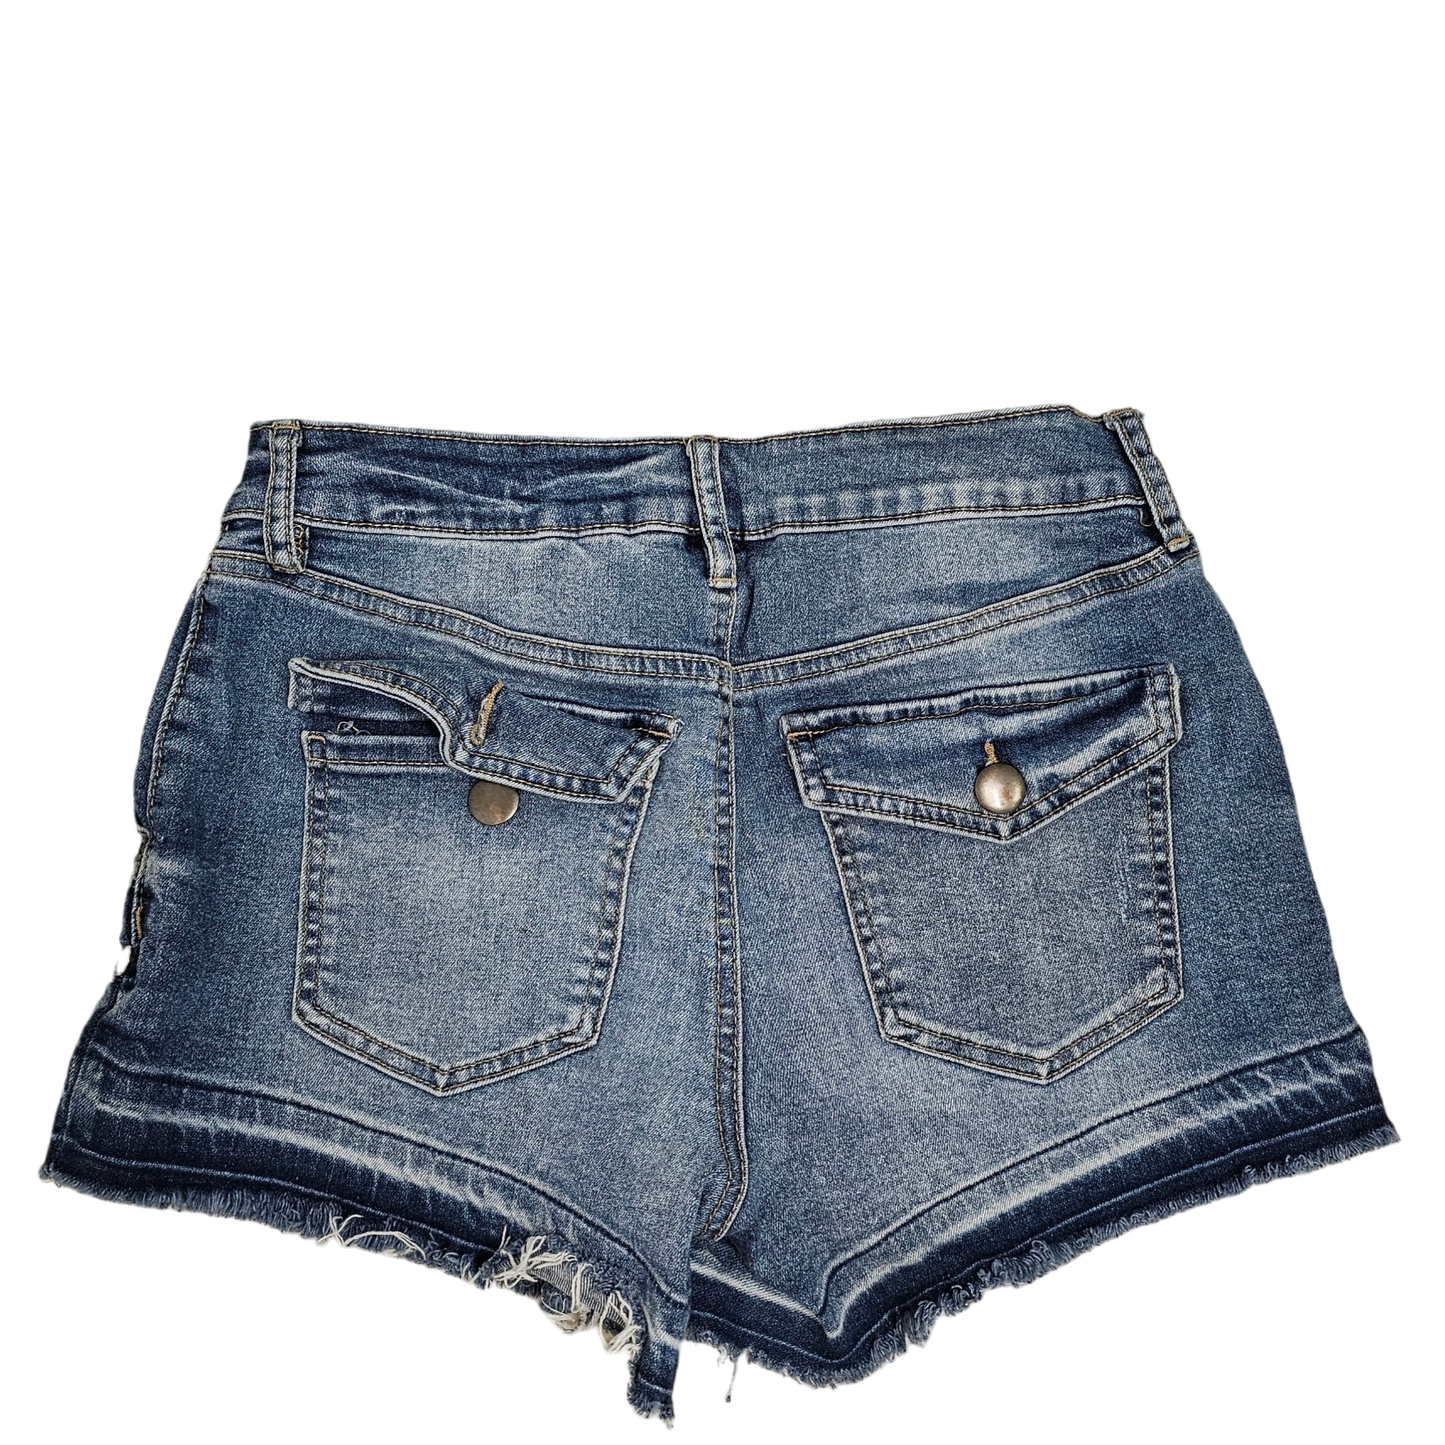 Shorts By rewash Size: 6